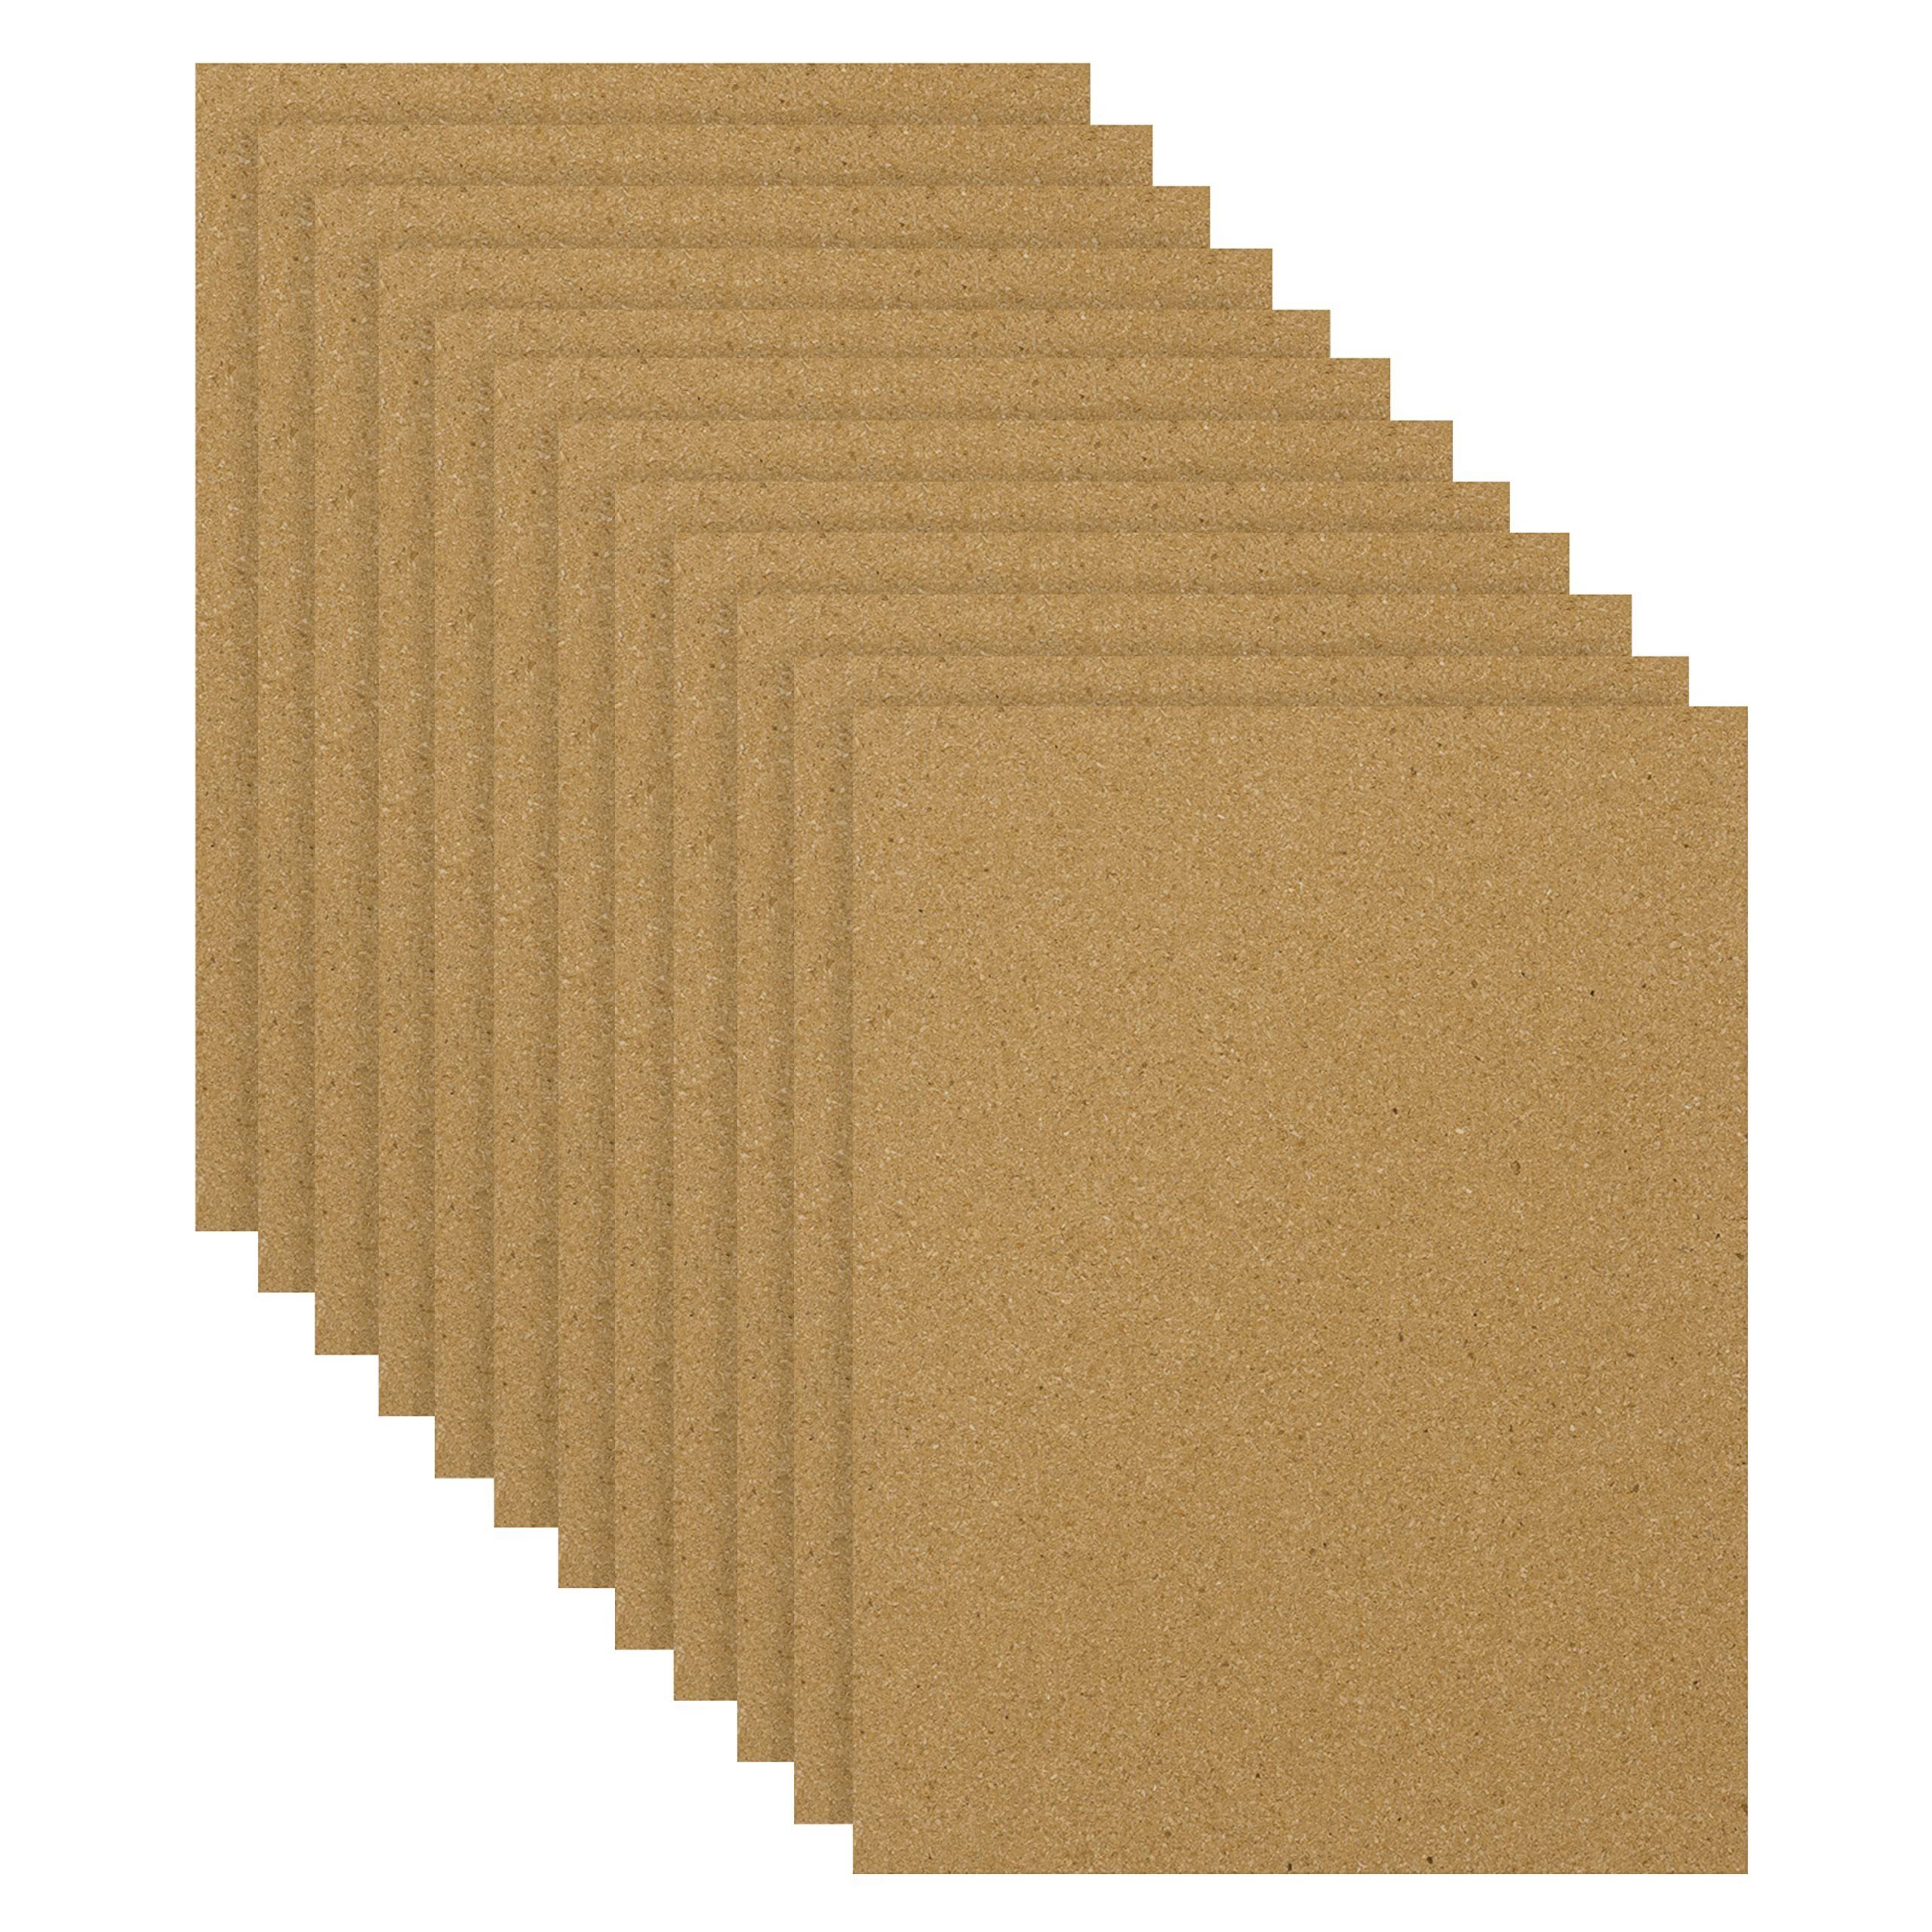 Belle Vous Aquarellpapier Korkplatten Set 12 Stück 27,8x21,4 cm - A4 Größe für Bastelprojekte, Korkplatten Set 12 Stück 27,8x21,4 cm groß - A4 Größe